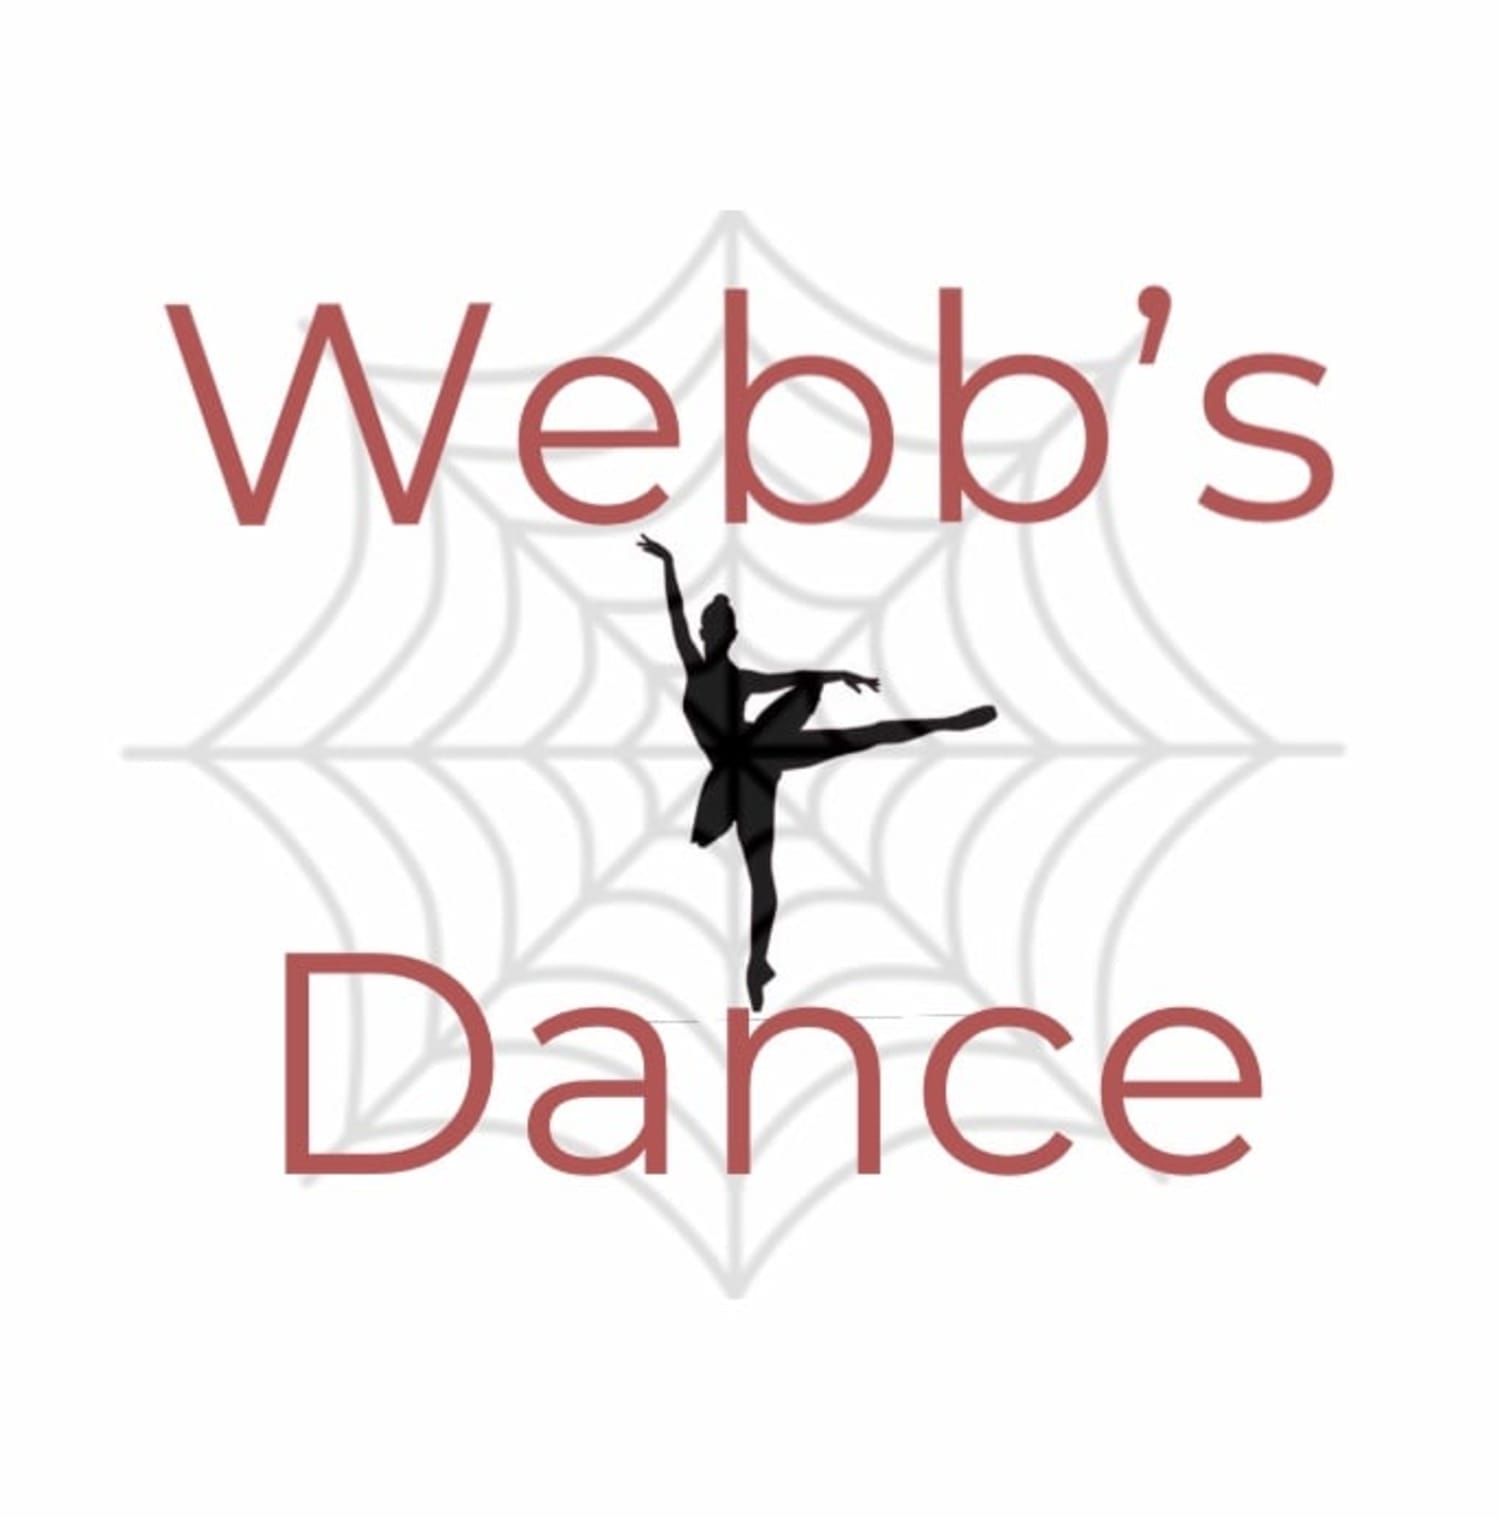 Webb's Dance